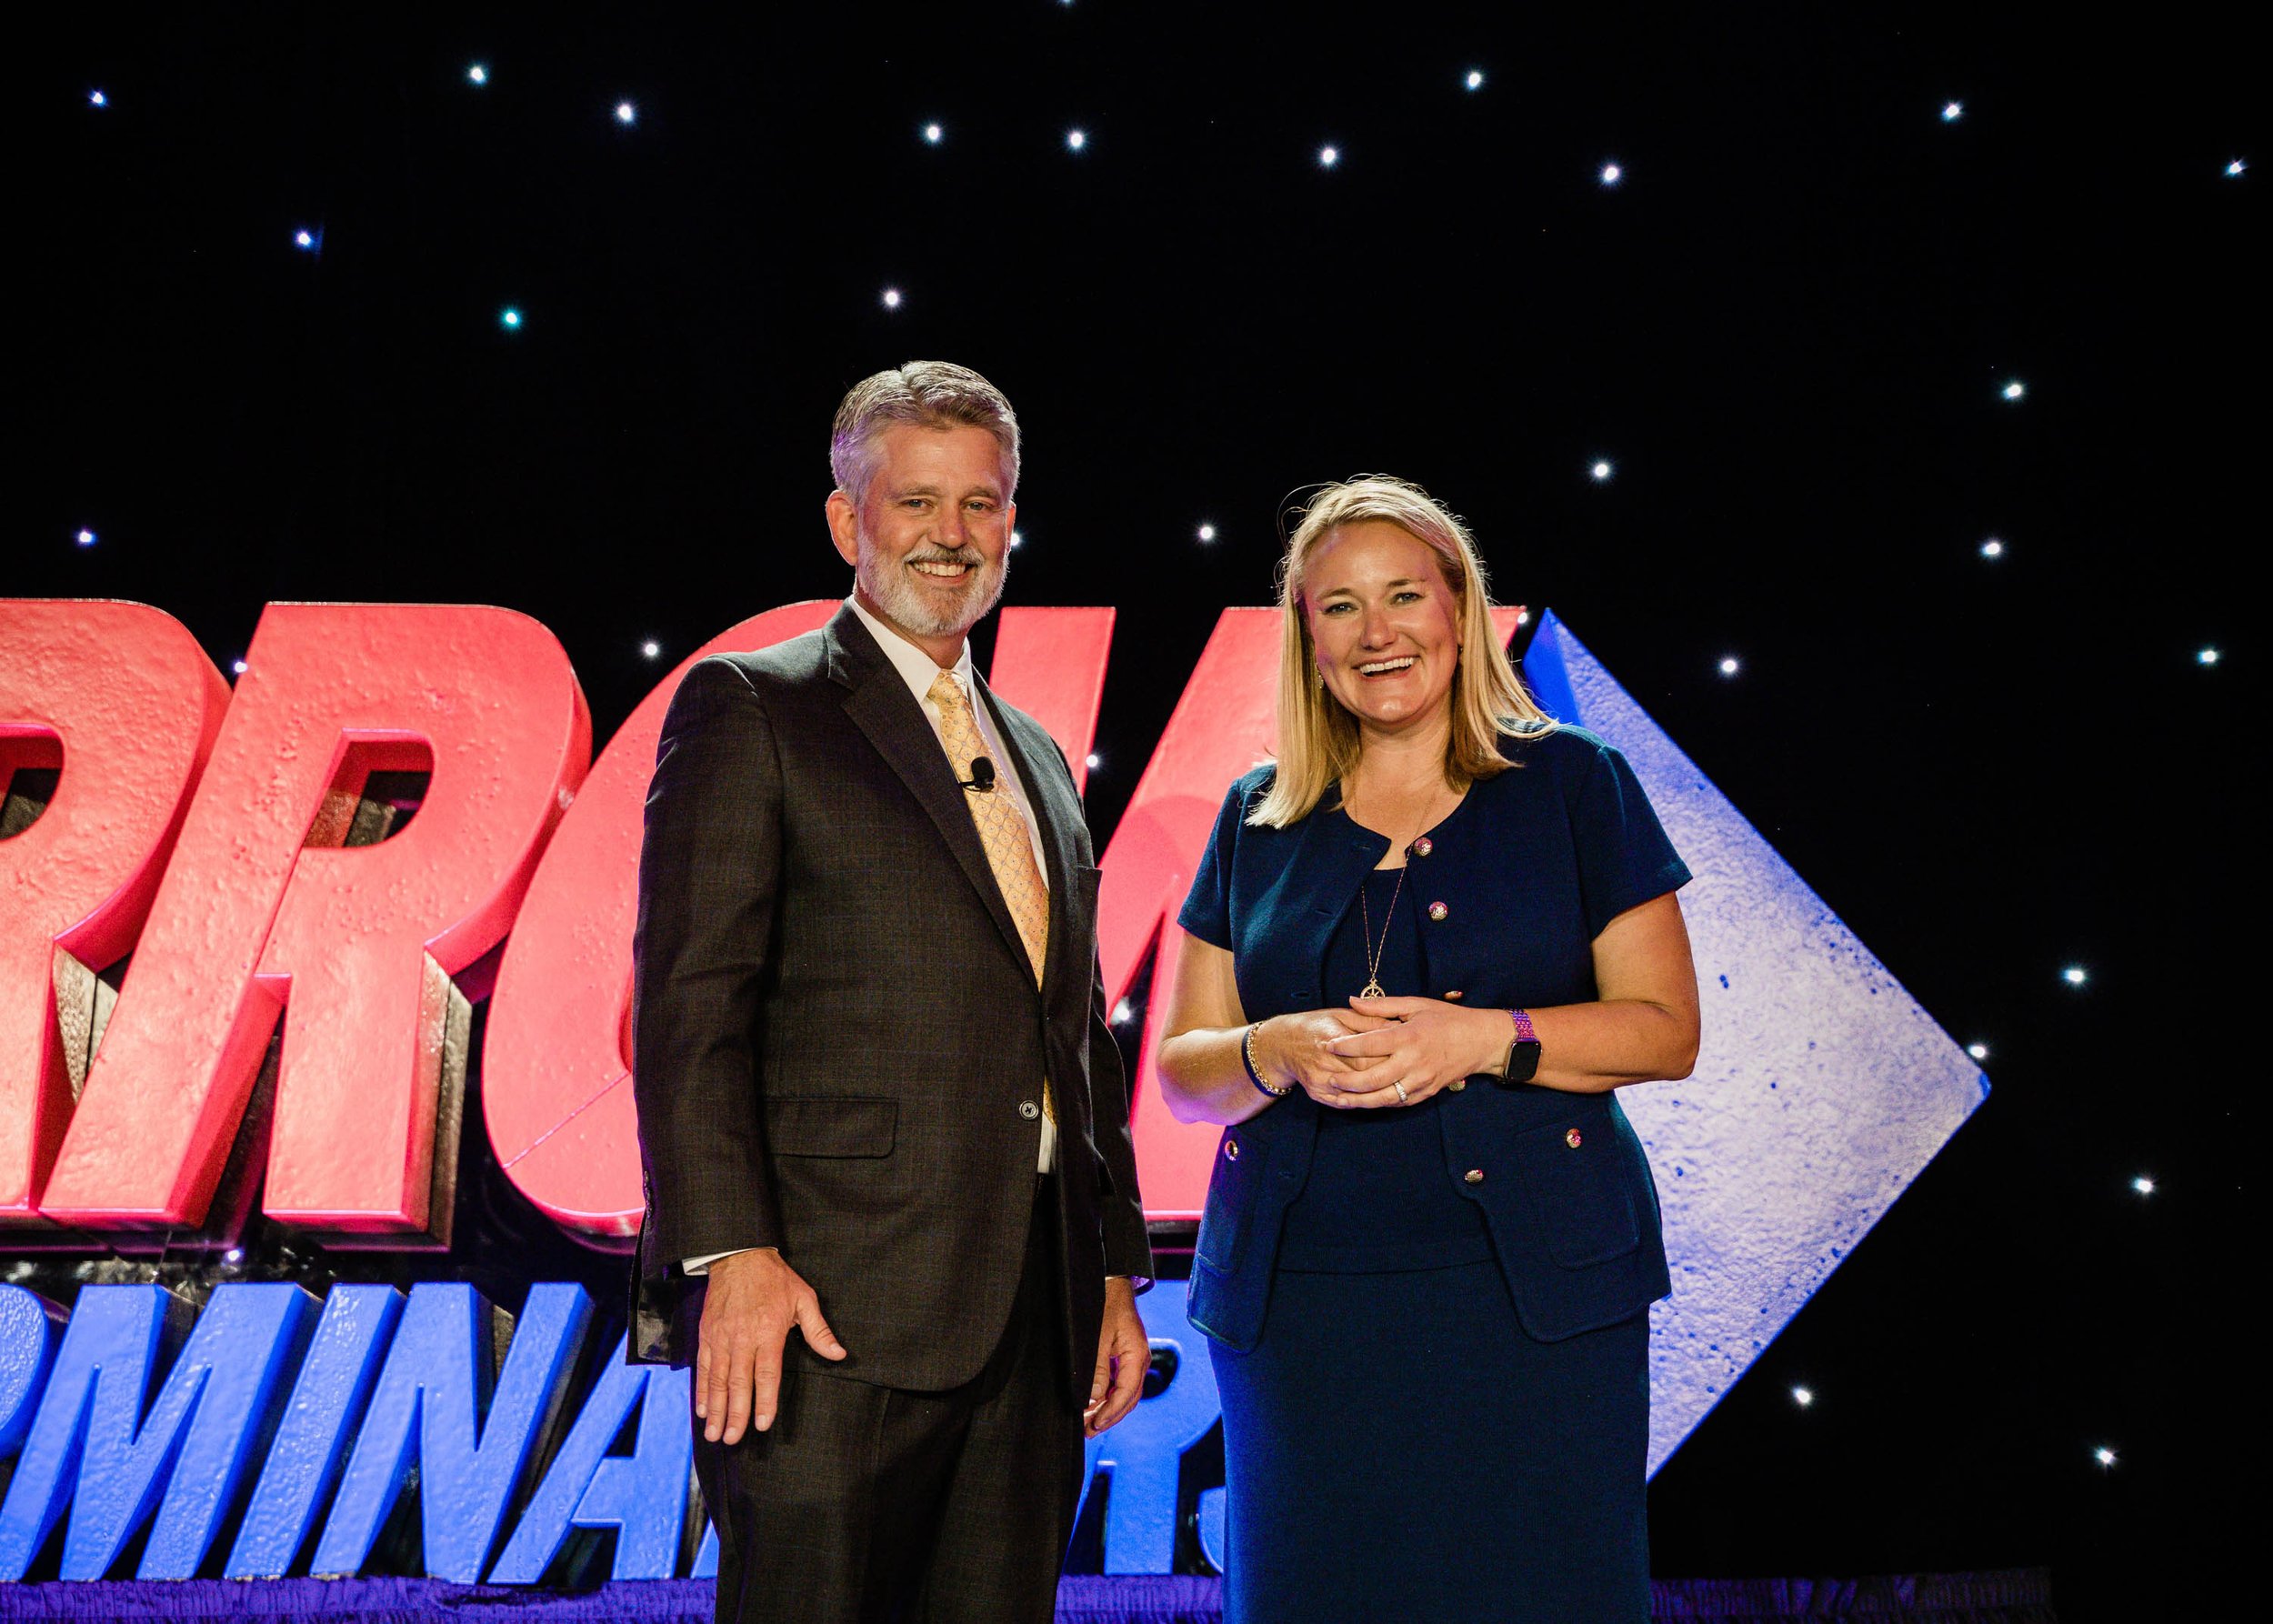  Arrow Exterminator’s Awards Gala at the Loews in Atlanta, Georgia.  